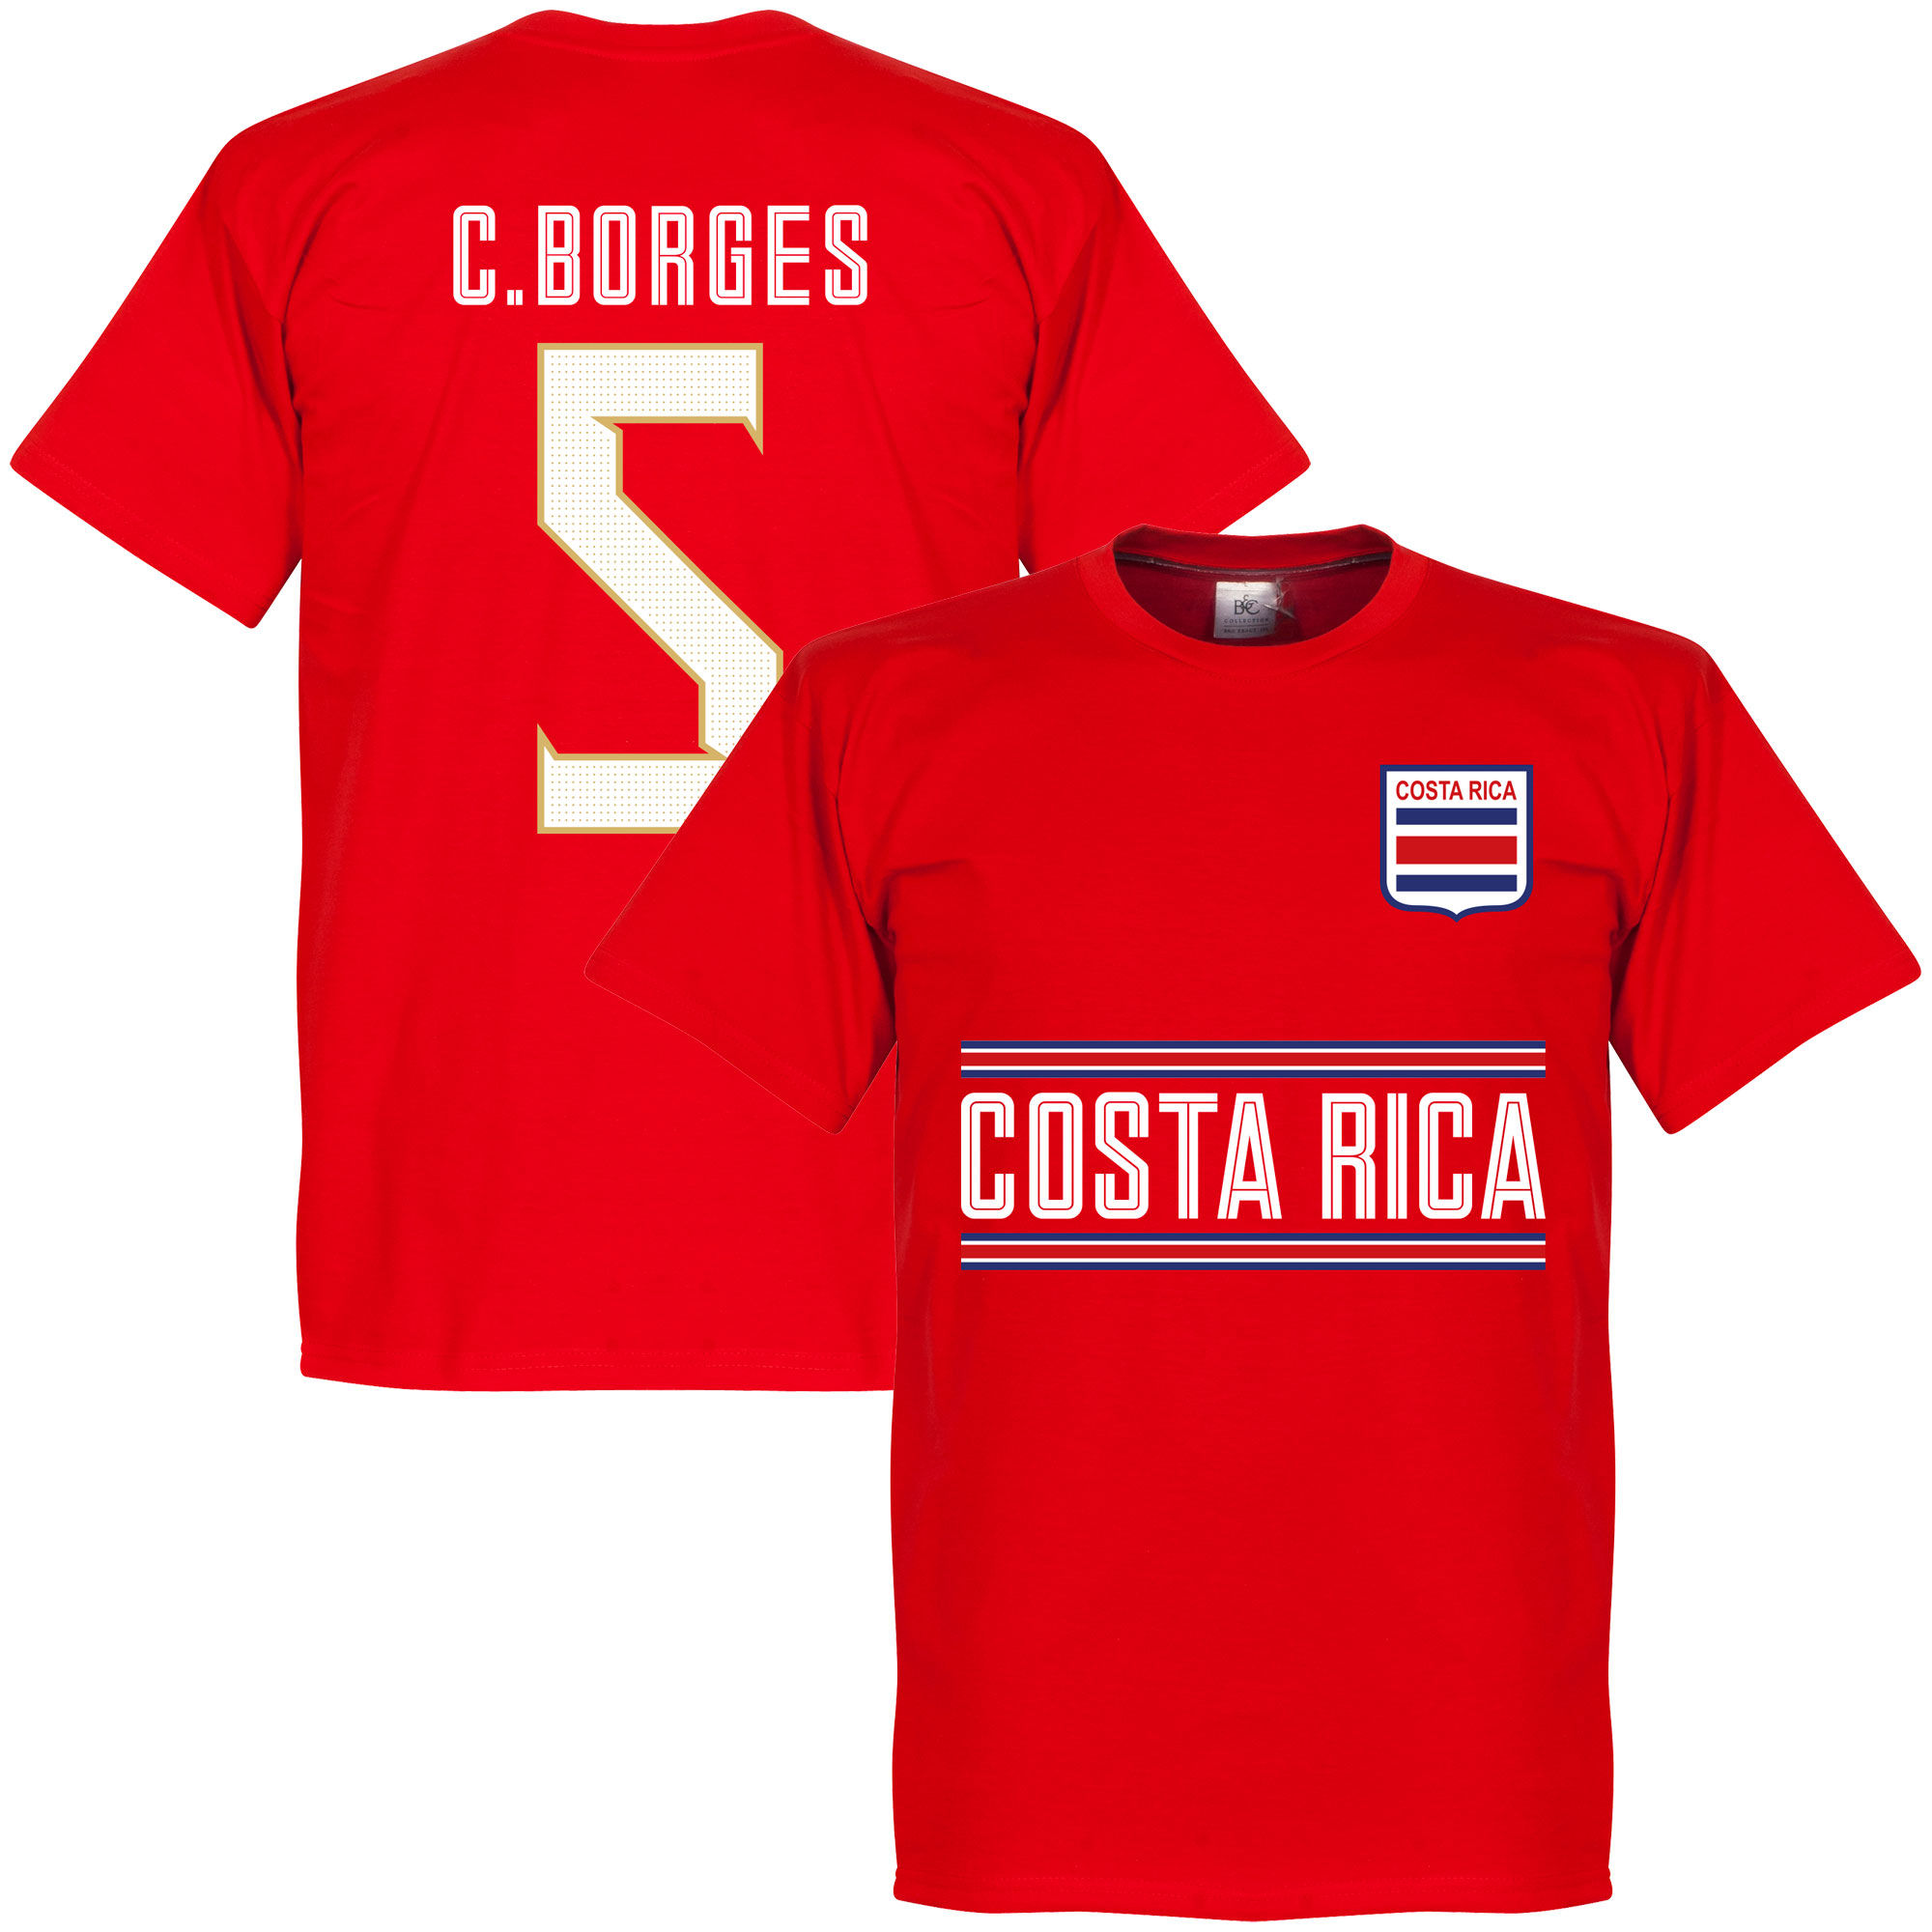 Kostarika - Tričko - červené, Celso Borges, číslo 5